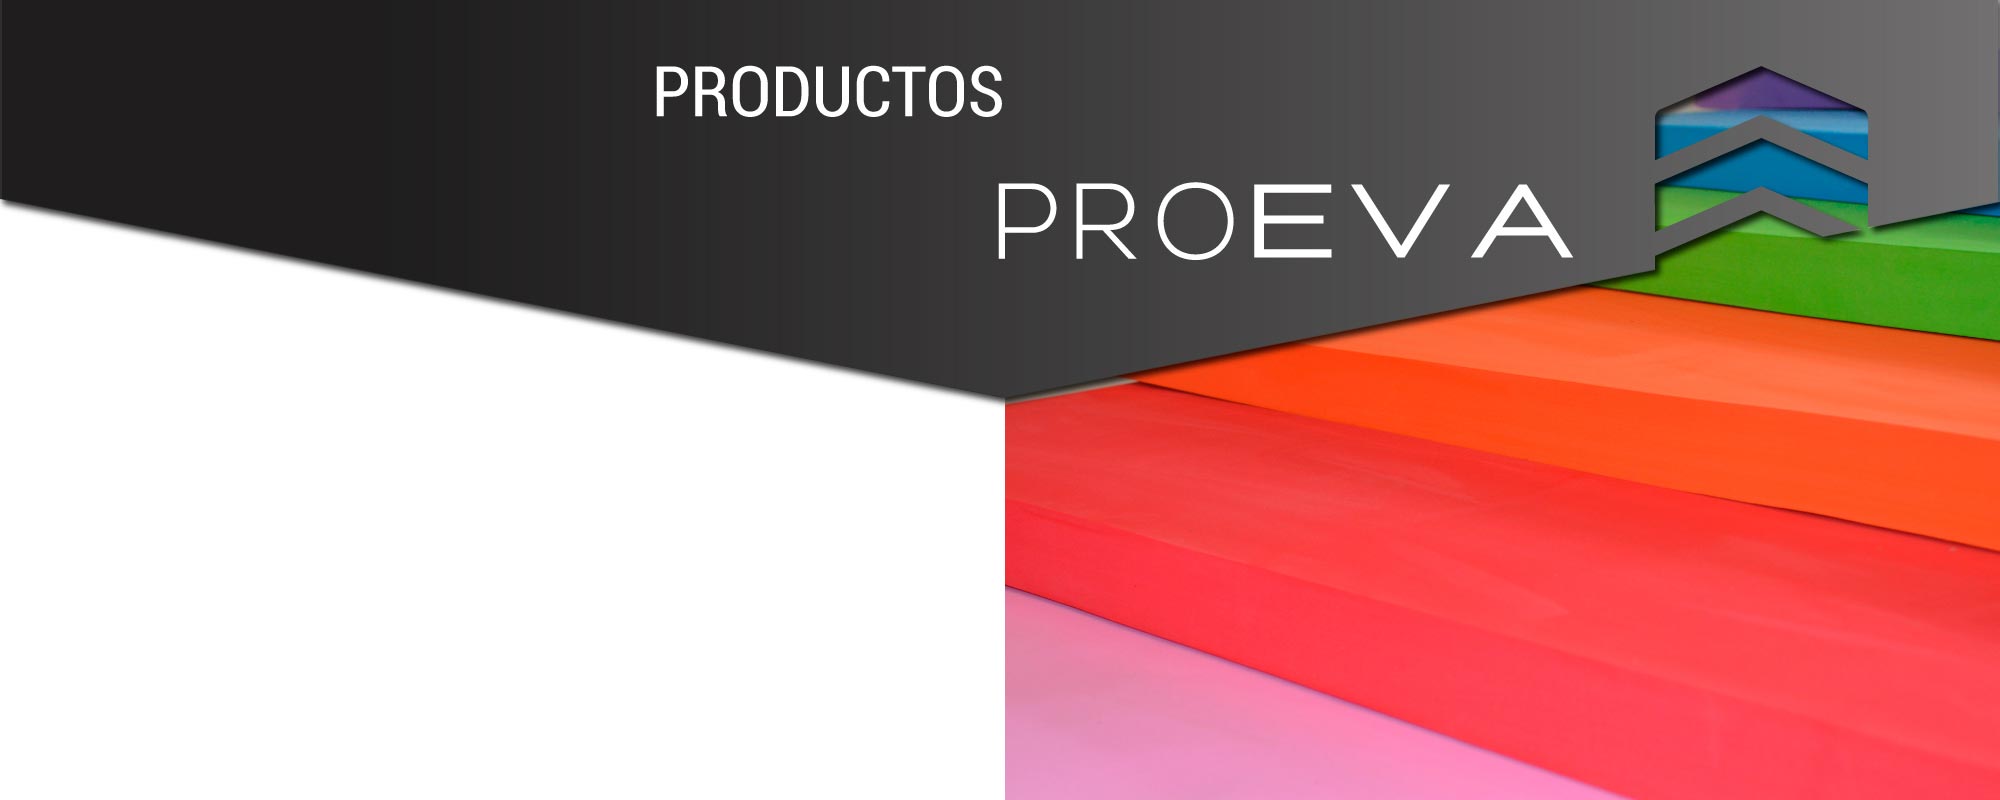 slide-01 Productos ProEva